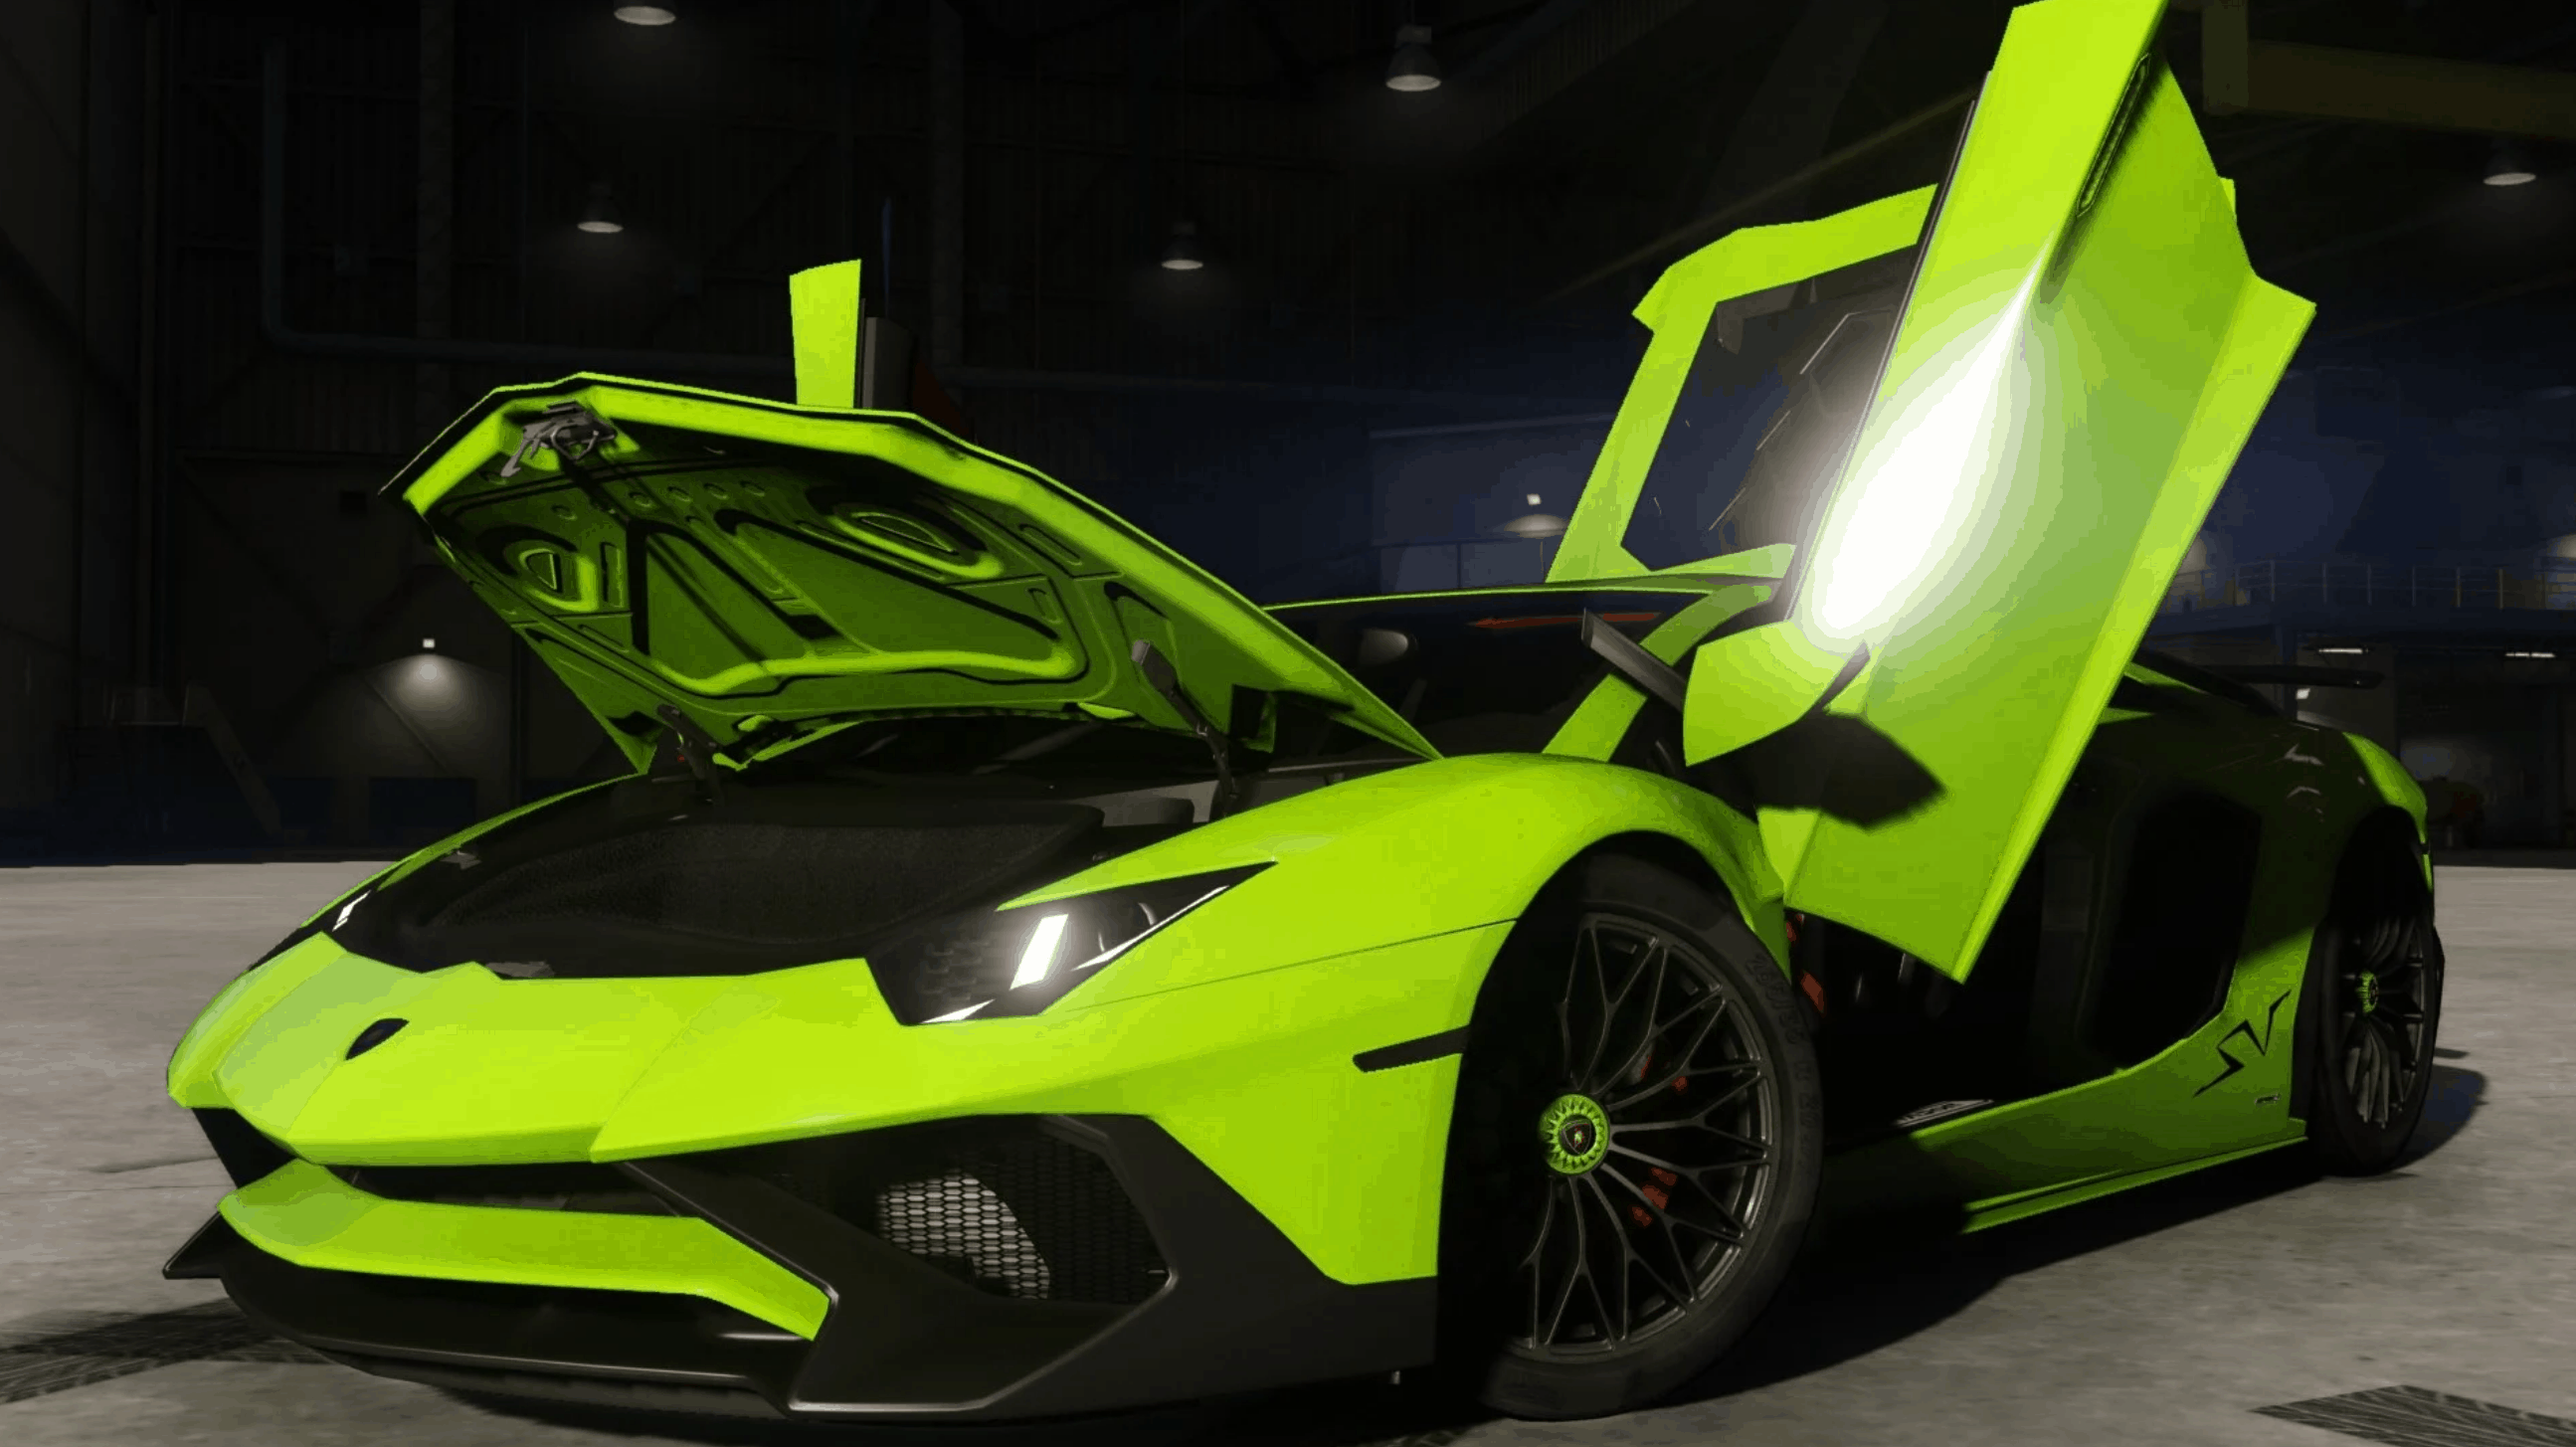 2015 Lamborghini Aventador LP700-4 1.5 - GTA 5 Mod | Grand Theft Auto 5 Mod